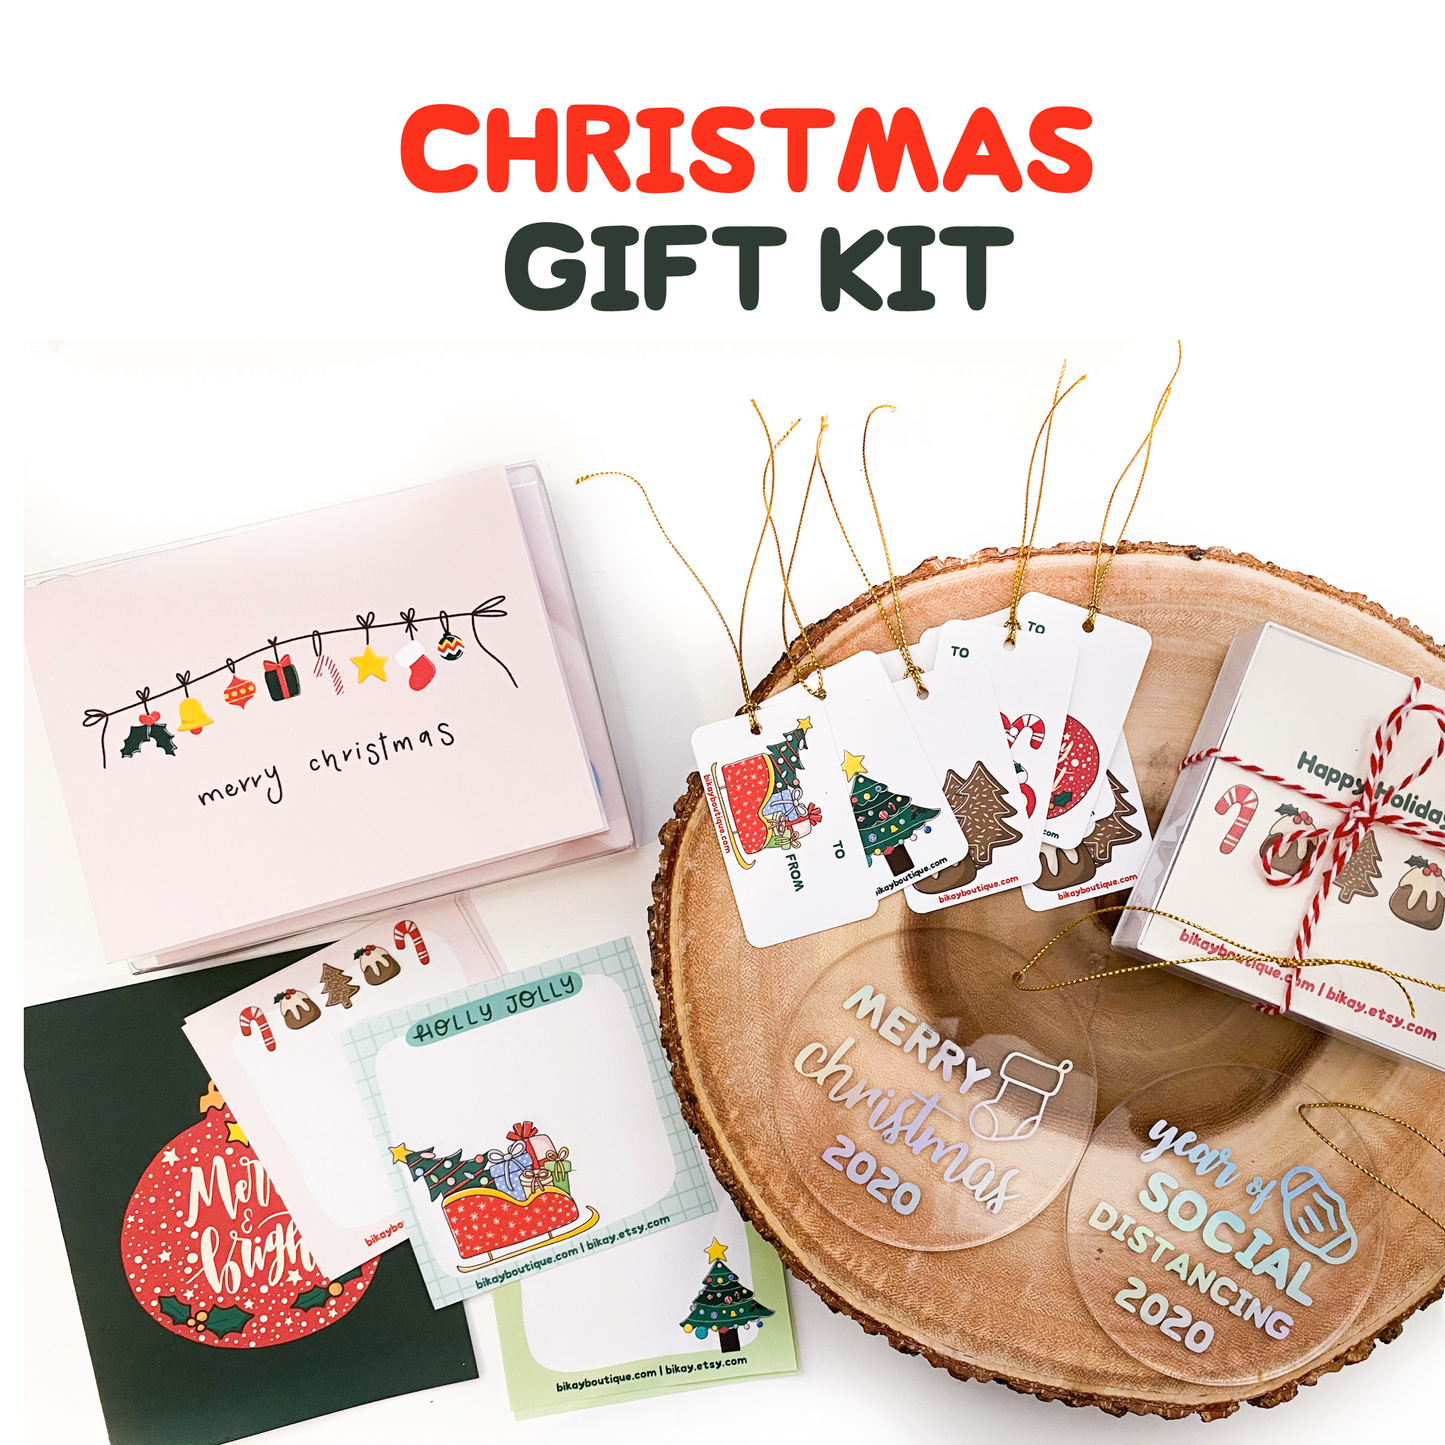 Santa's Bundle | Christmas gifting set ($78 value)